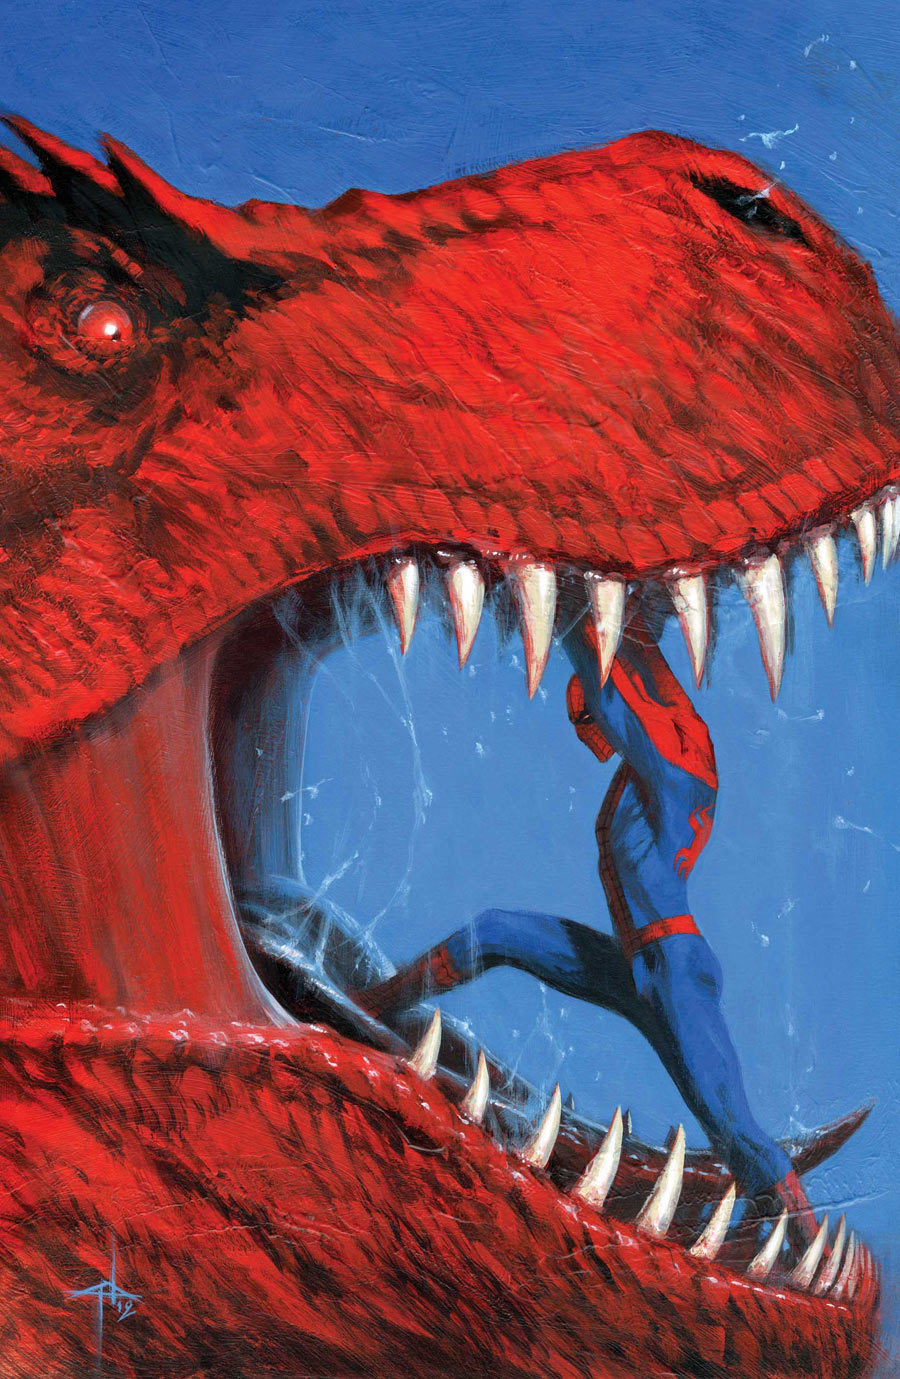 
Spider-Man by Gabriele Dell’Otto.
